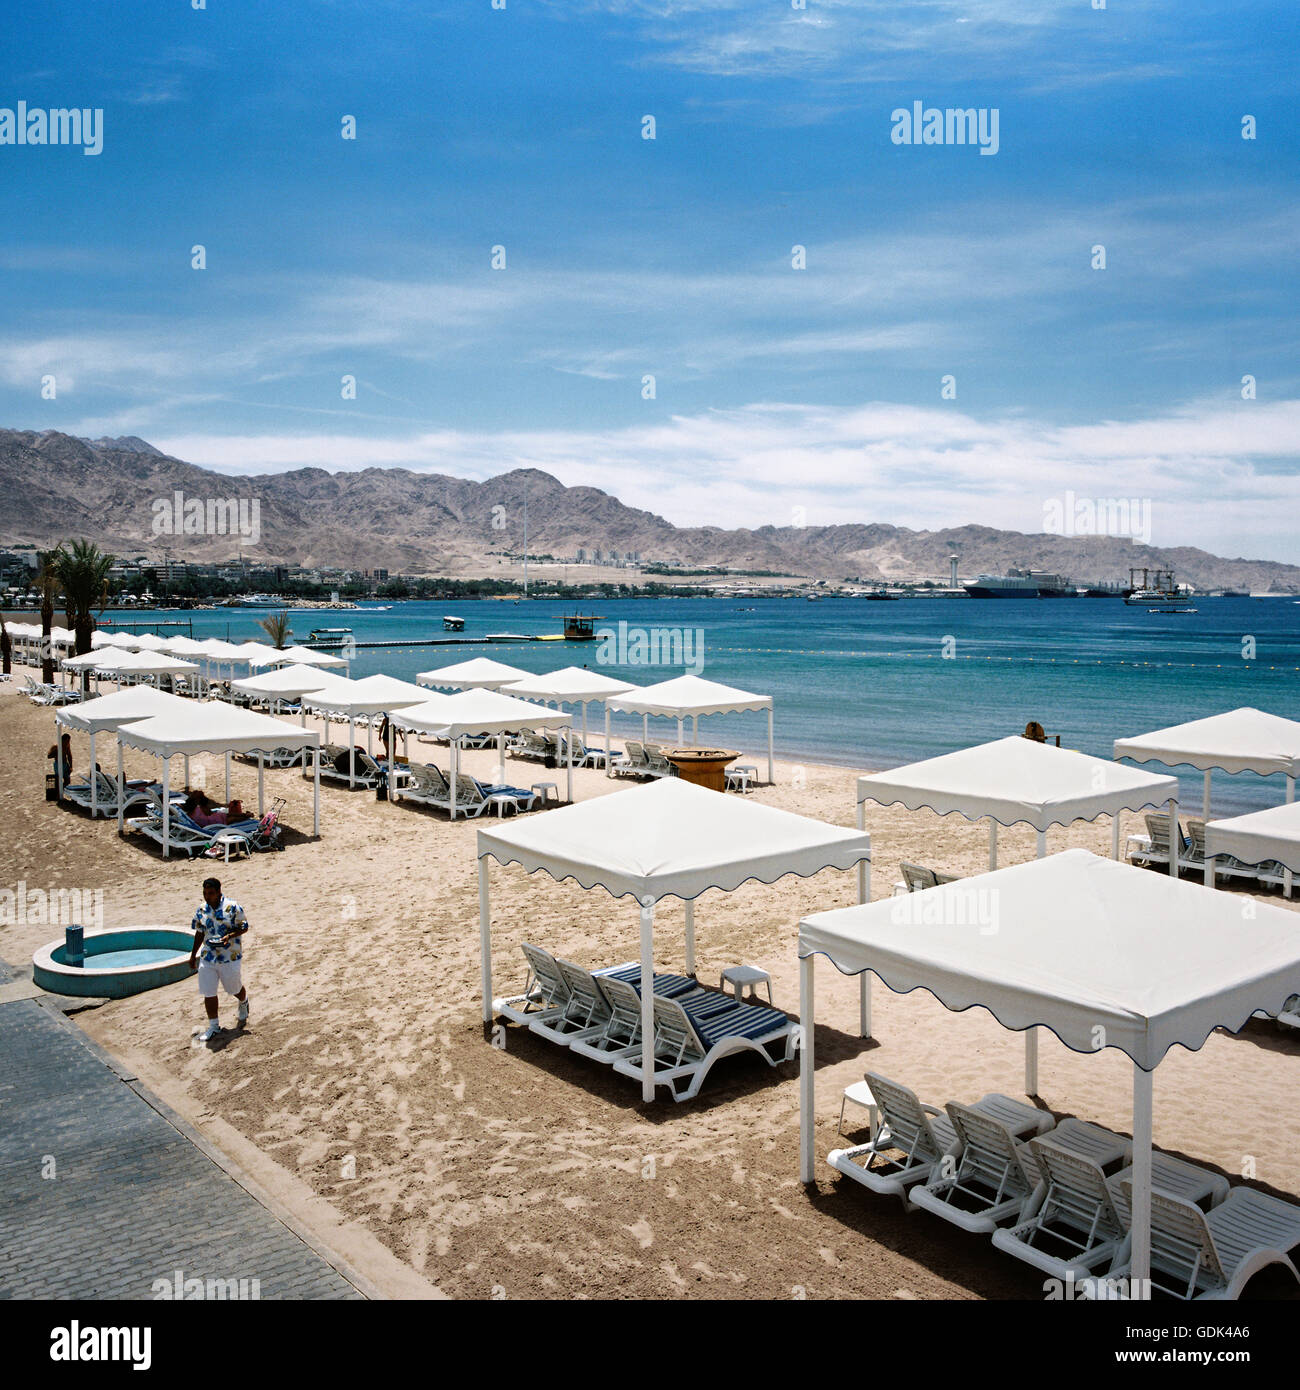 Private beach at the Intercontinental Hotel. Aqaba, Jordan Stock Photo -  Alamy